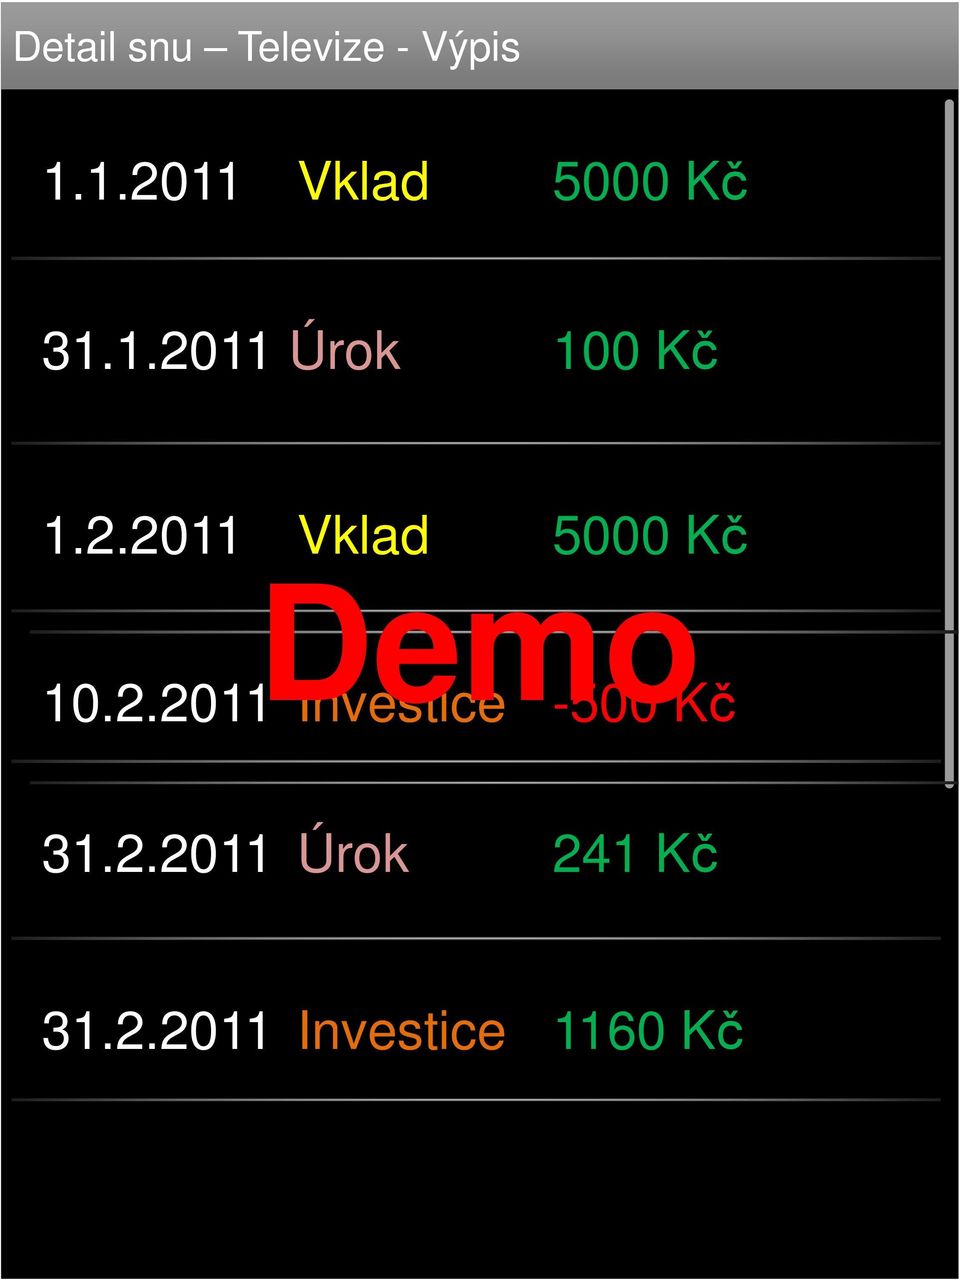 2.2011 Vklad 5000 Kč 10.2.2011 Investice -500 Kč 31.